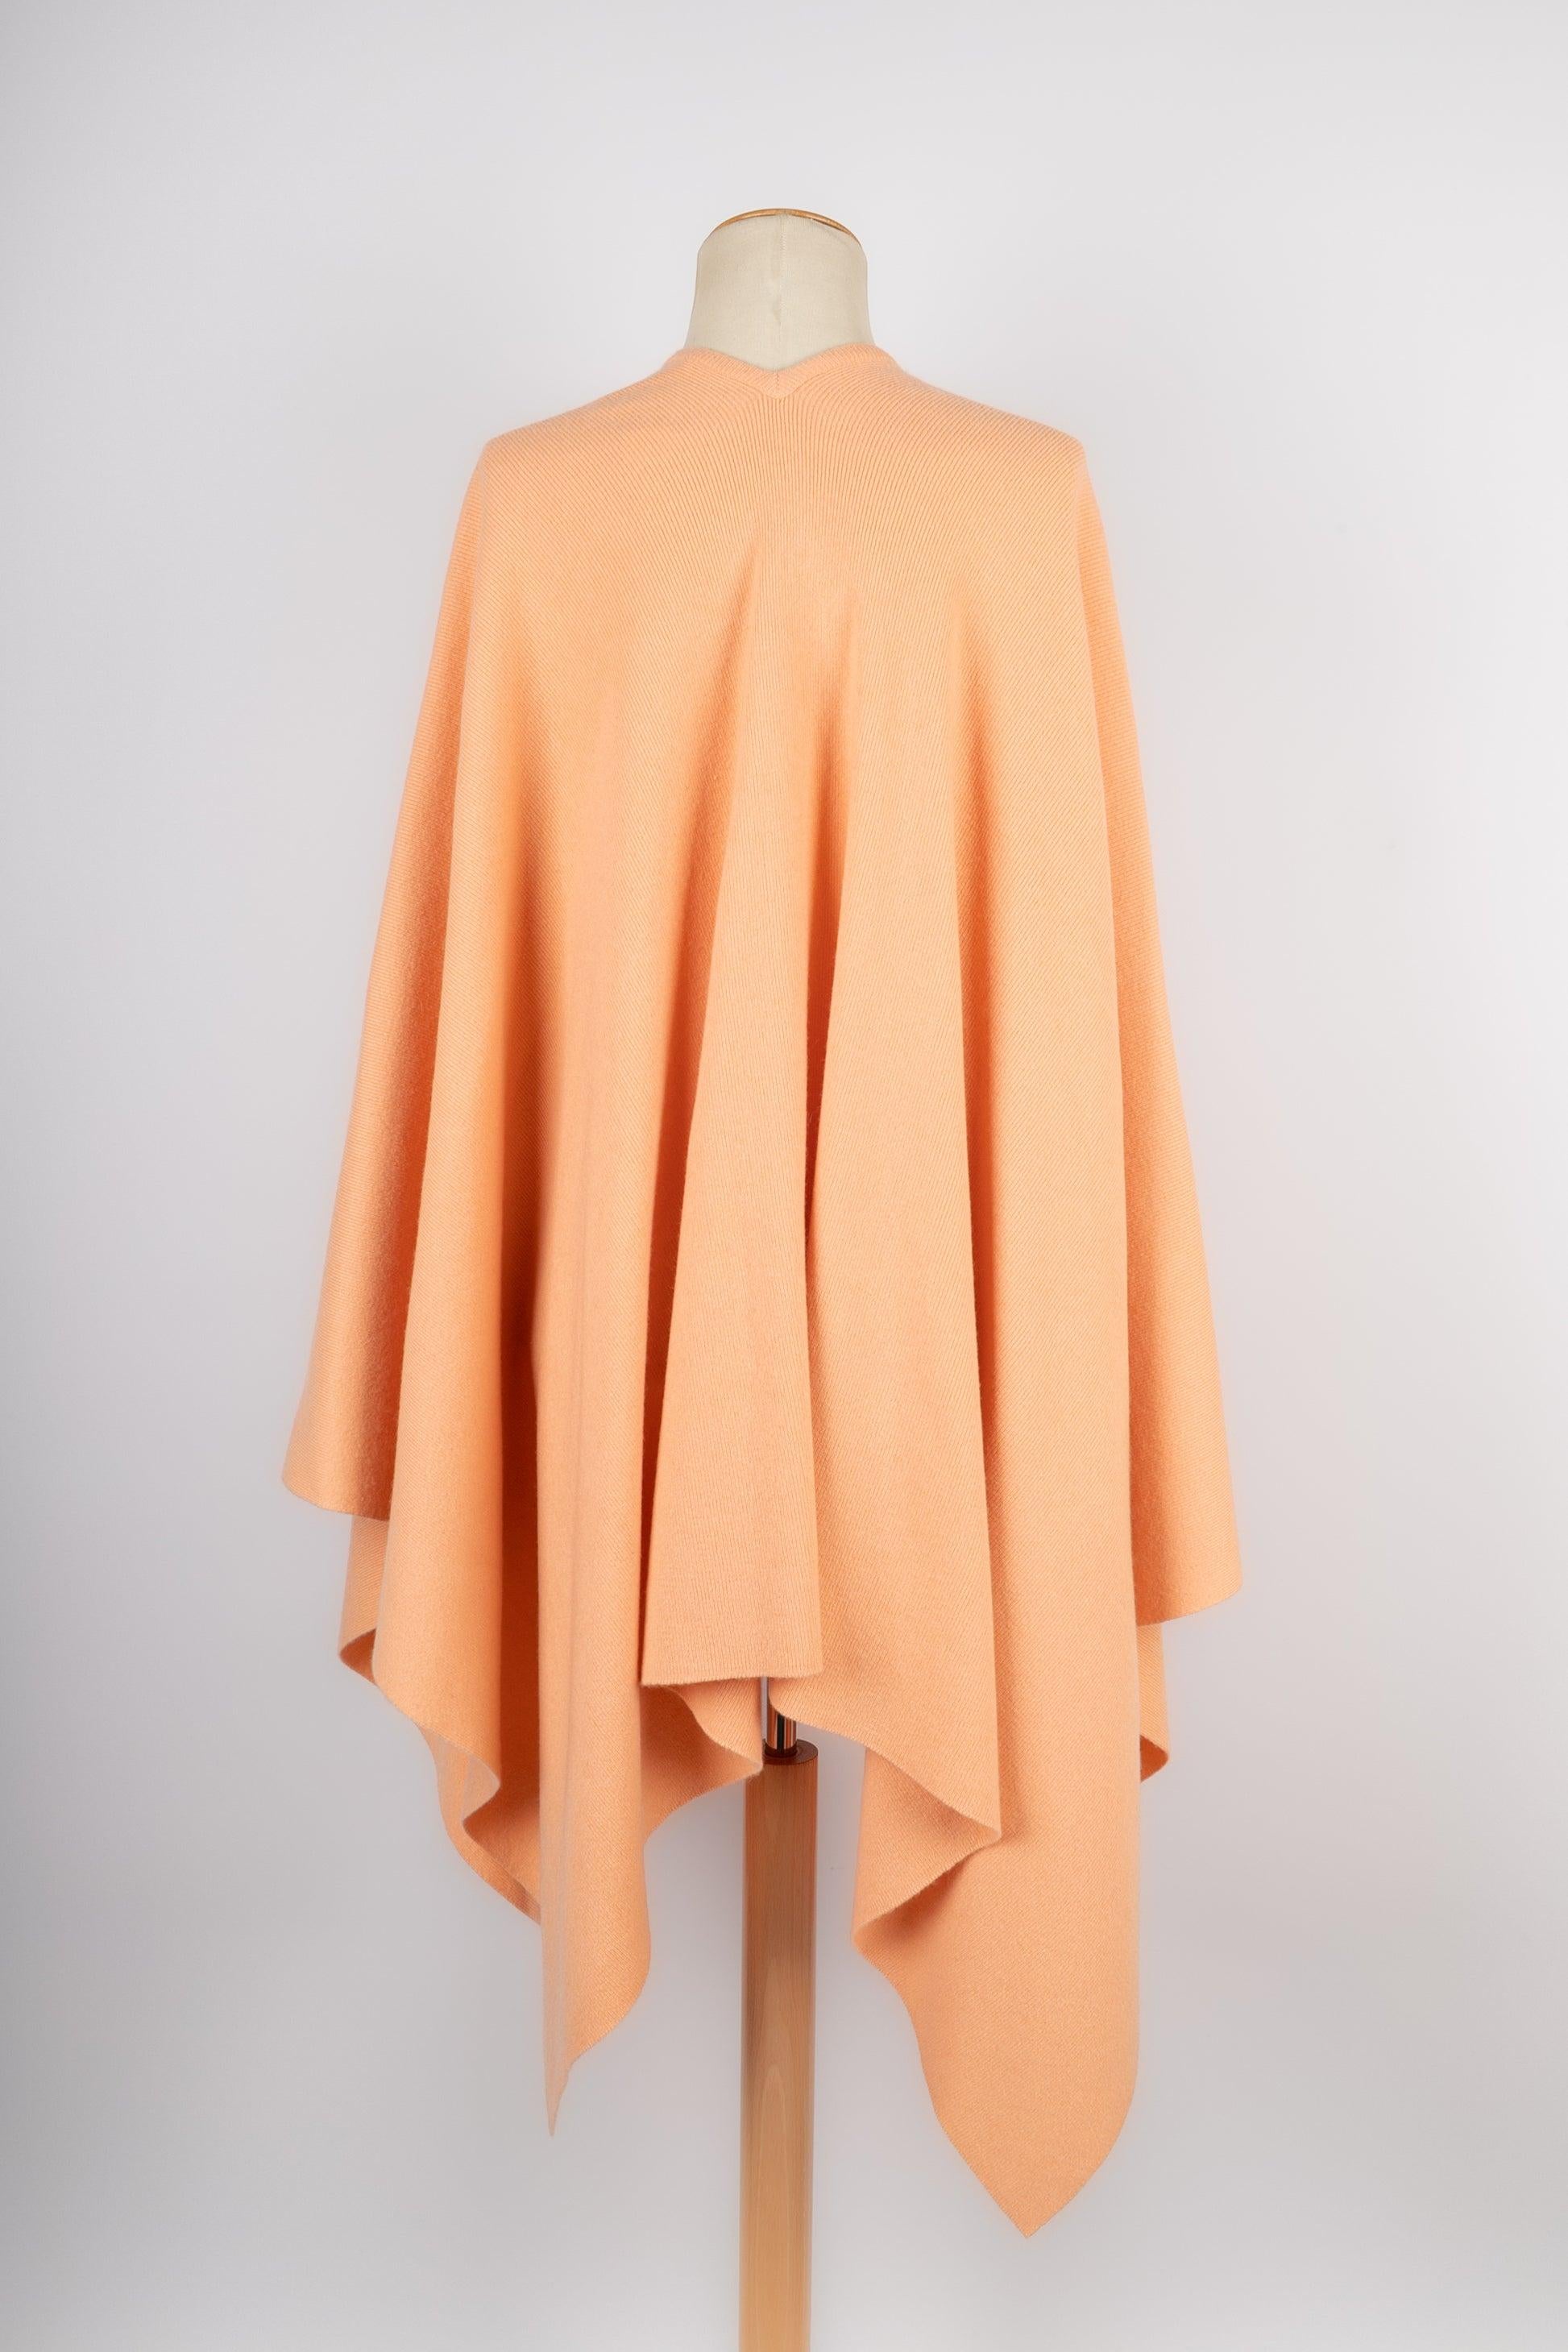 Women's Nina Ricci Orange Cashmere Poncho For Sale